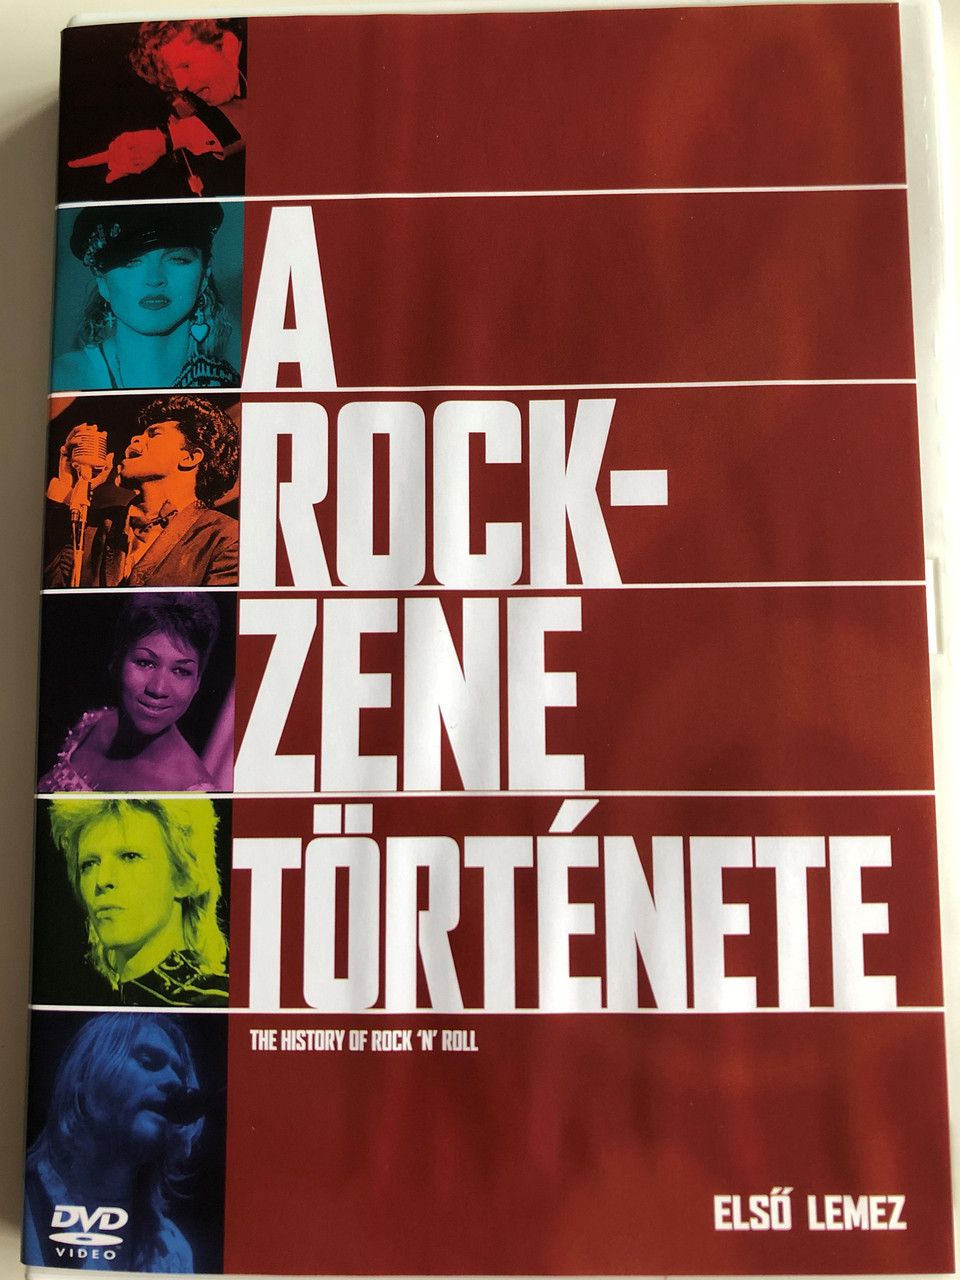 The History of Rock 'n' Roll Disc 1 DVD 1995 A rock zene története / Első  lemez / A Rock 'n' Roll Berobban / Episodes: Rock'n'roll Explodes -  bibleinmylanguage